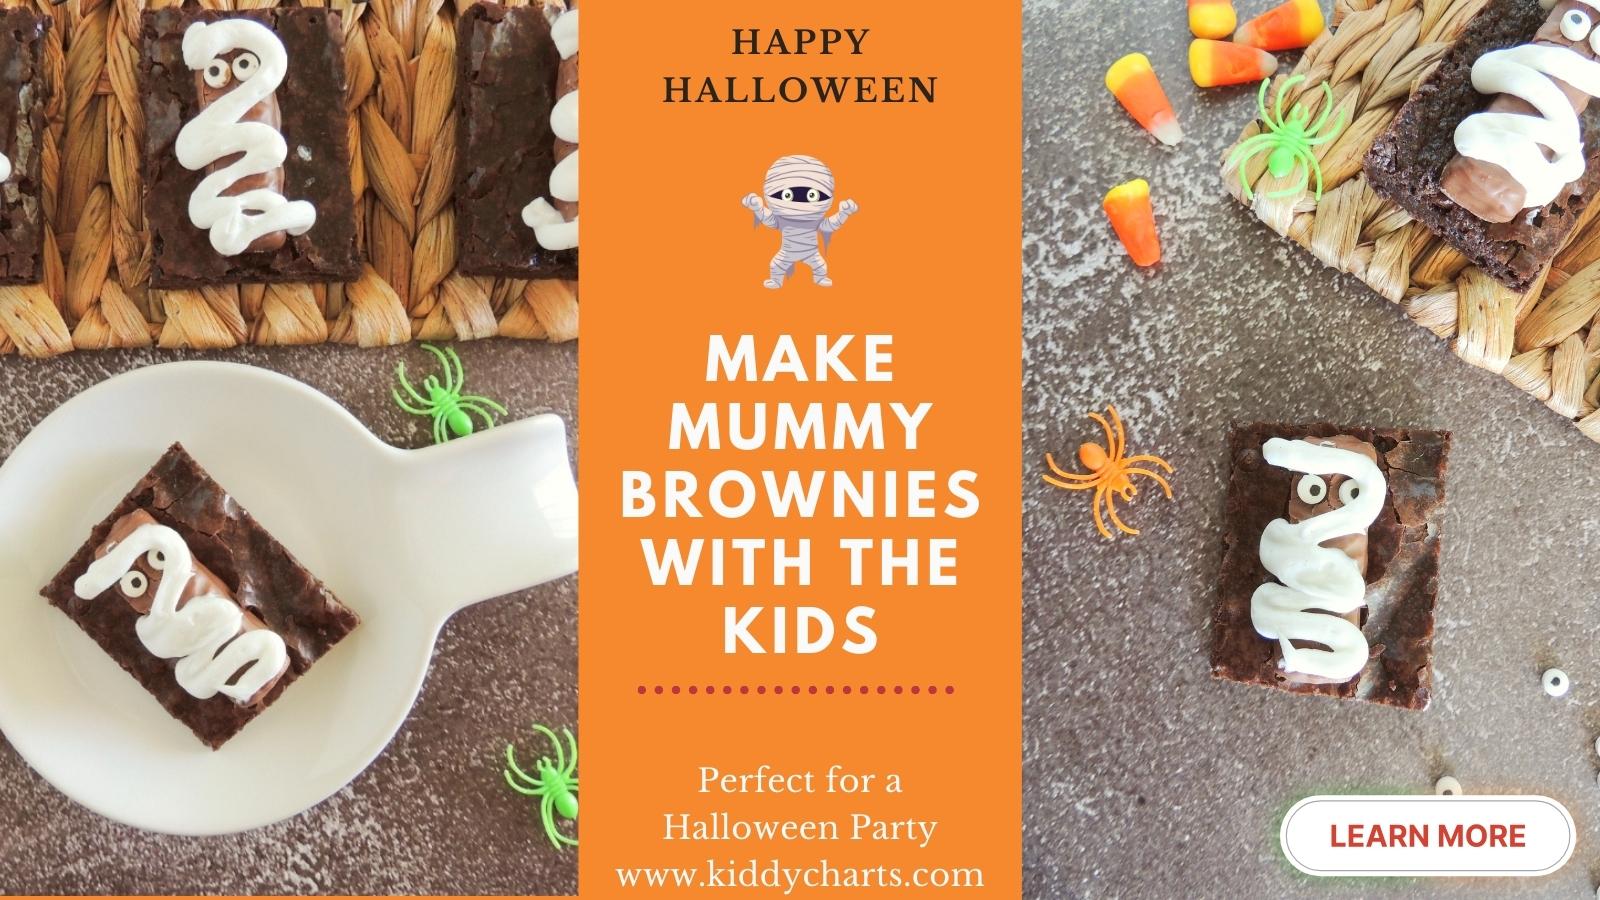 Decadent delights for Halloween: Mummy brownies